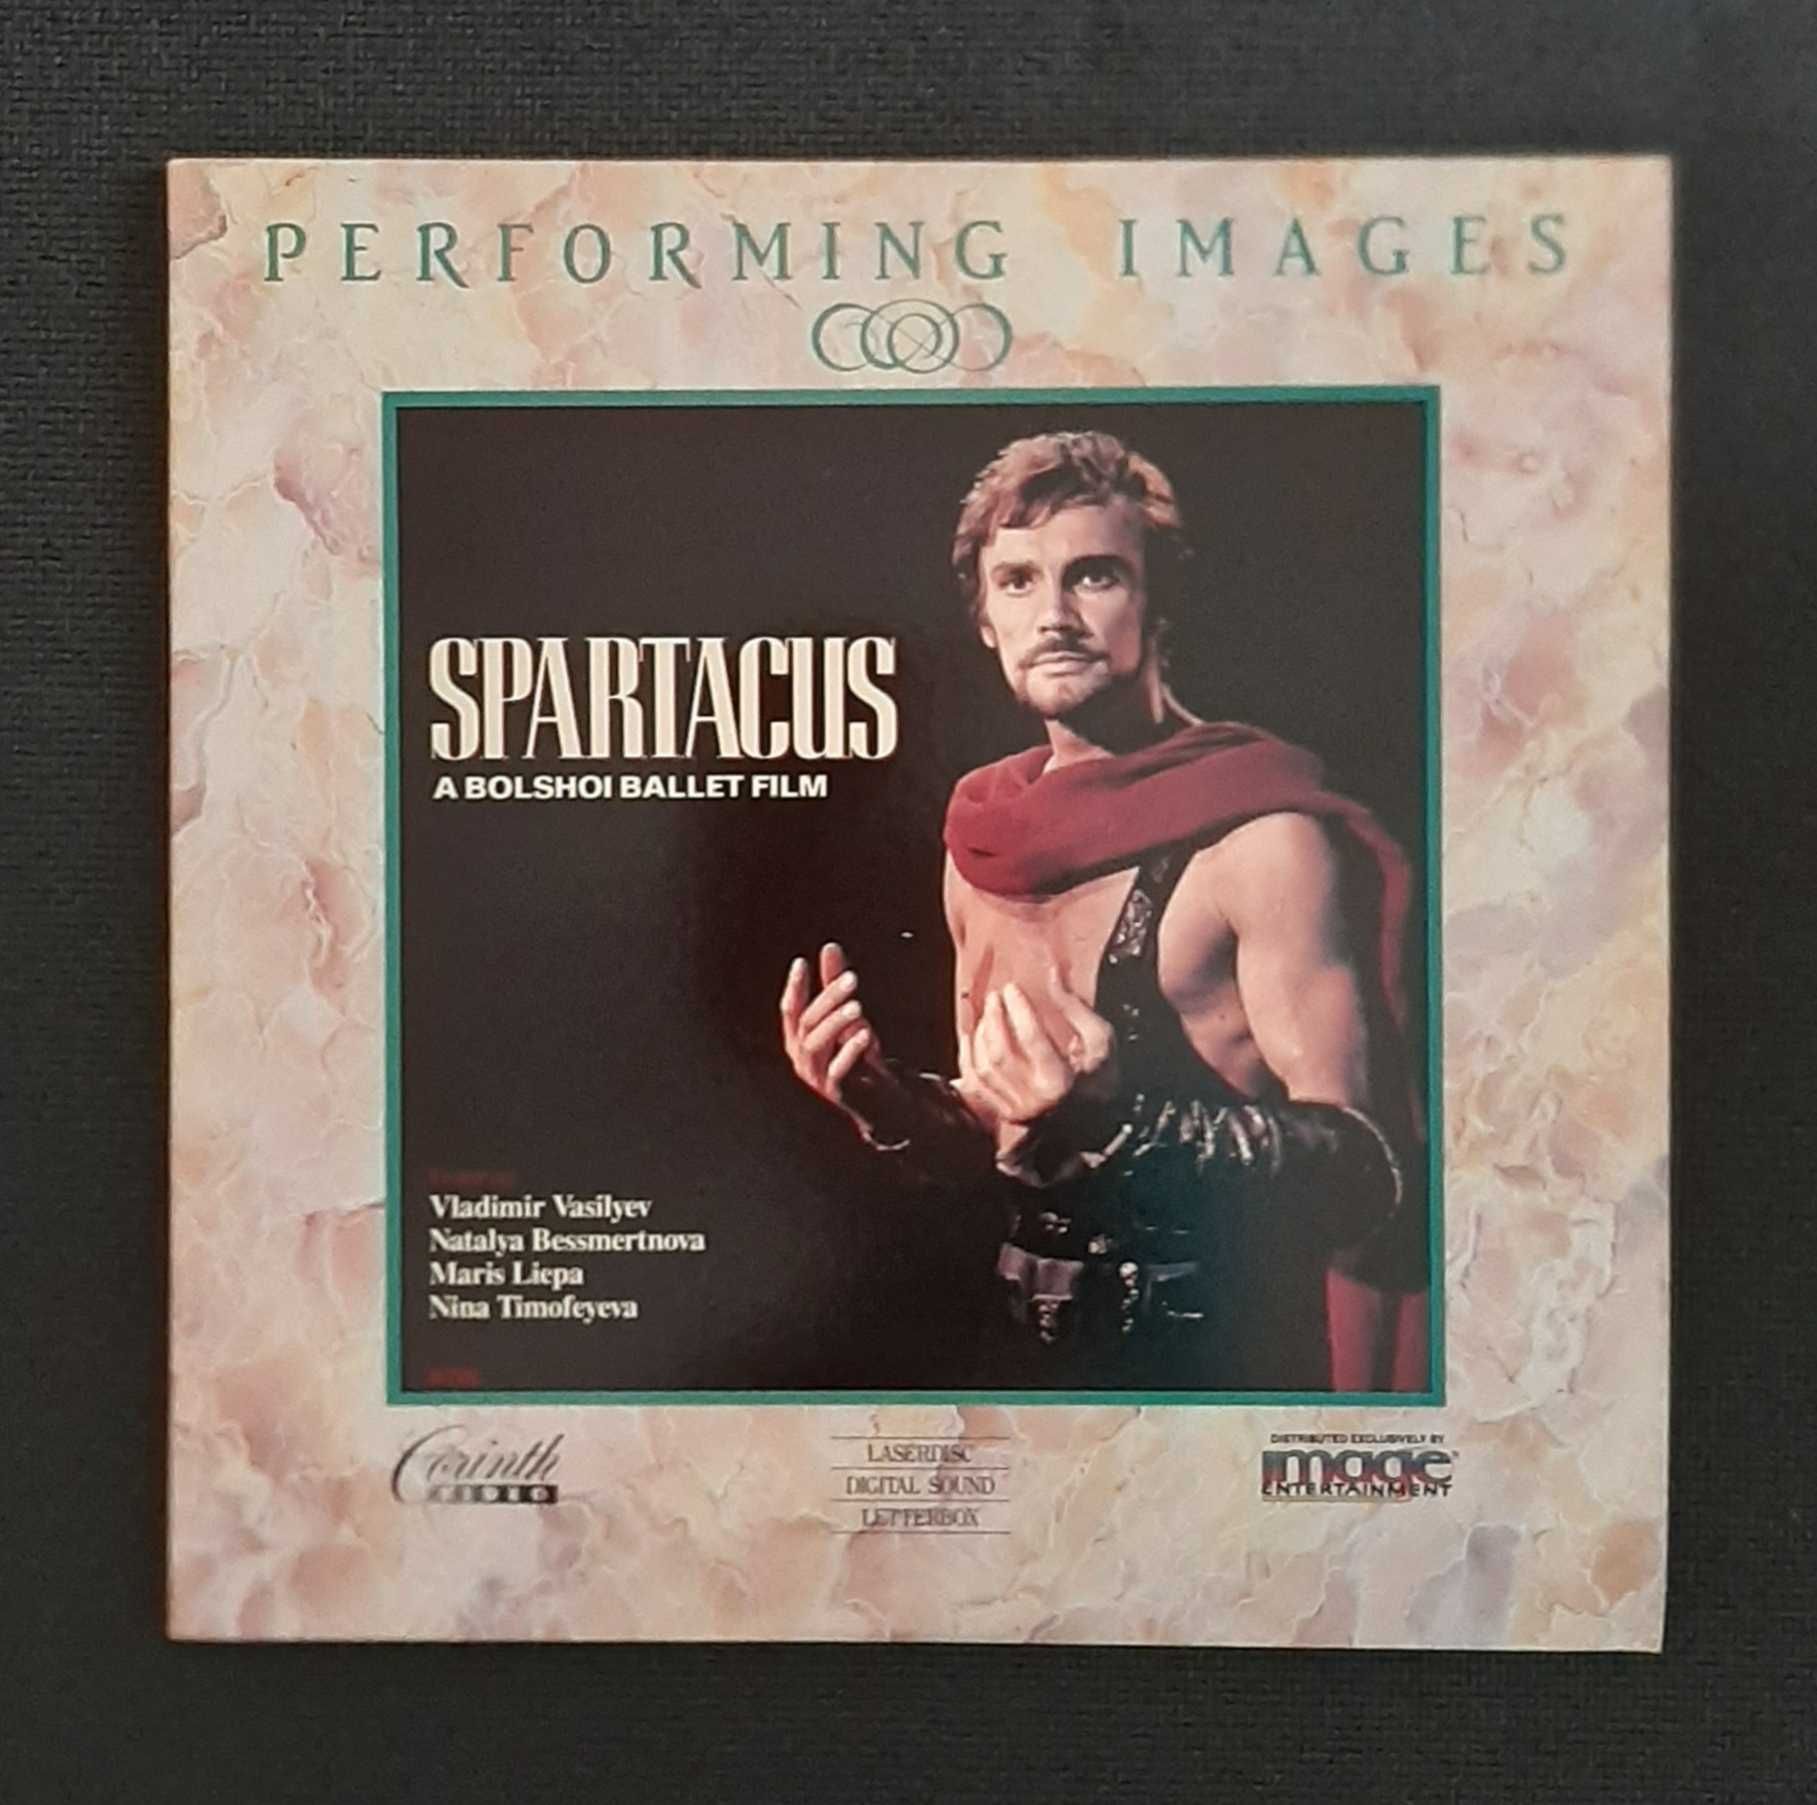 LaserDisc do filme "Spartacus - A Bolshoi Ballet Film" (Odivelas)